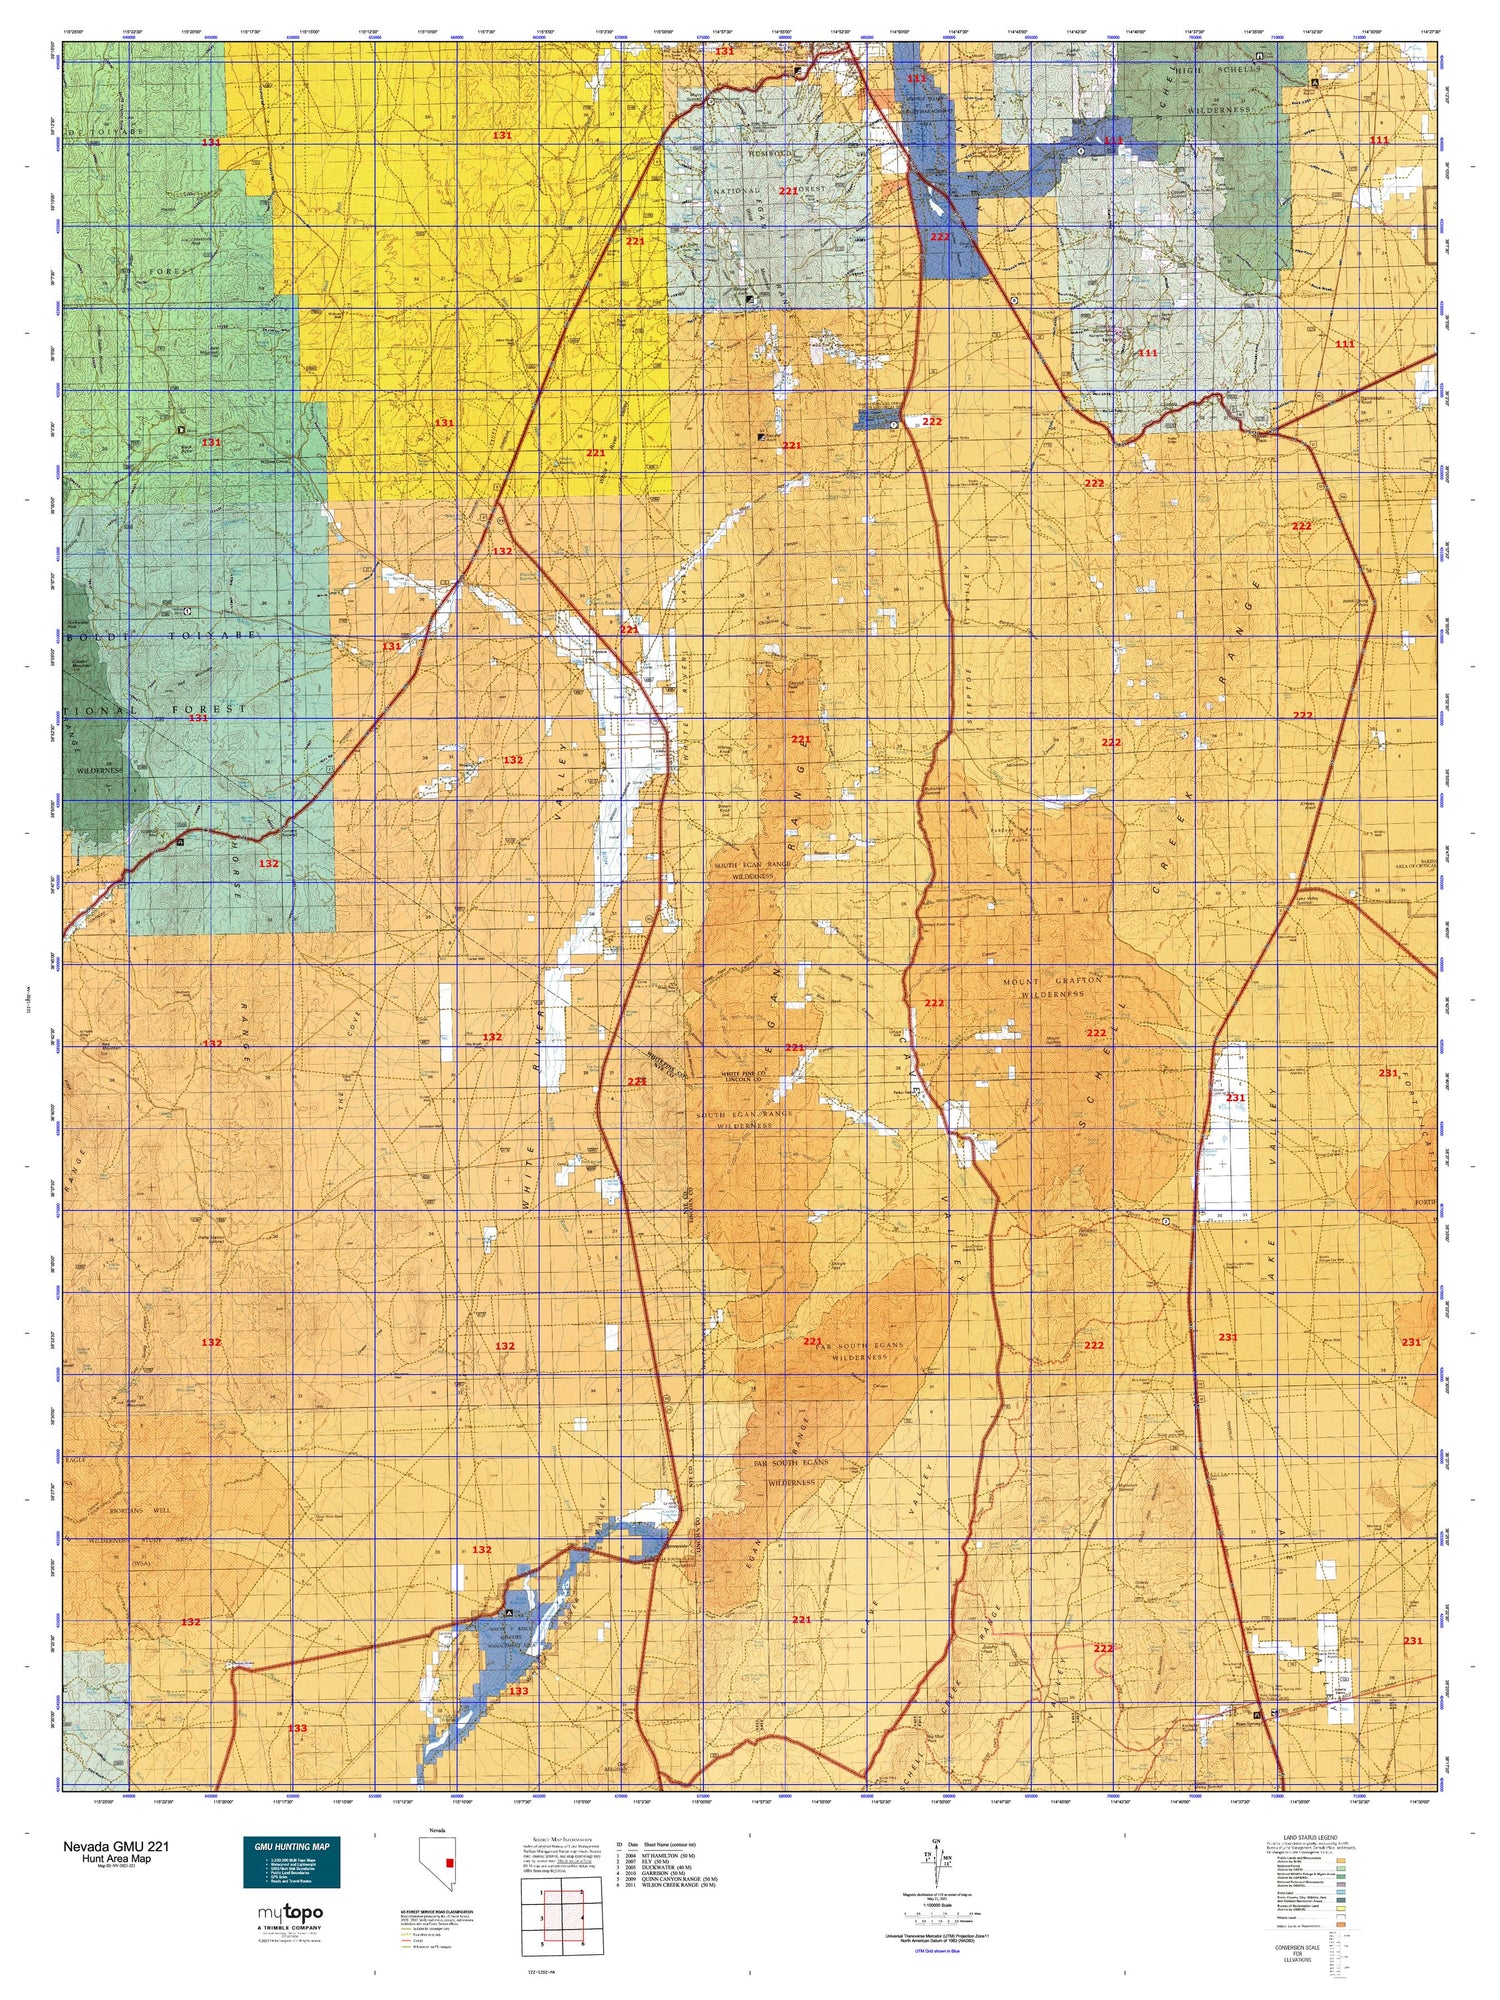 Nevada GMU 221 Map Image